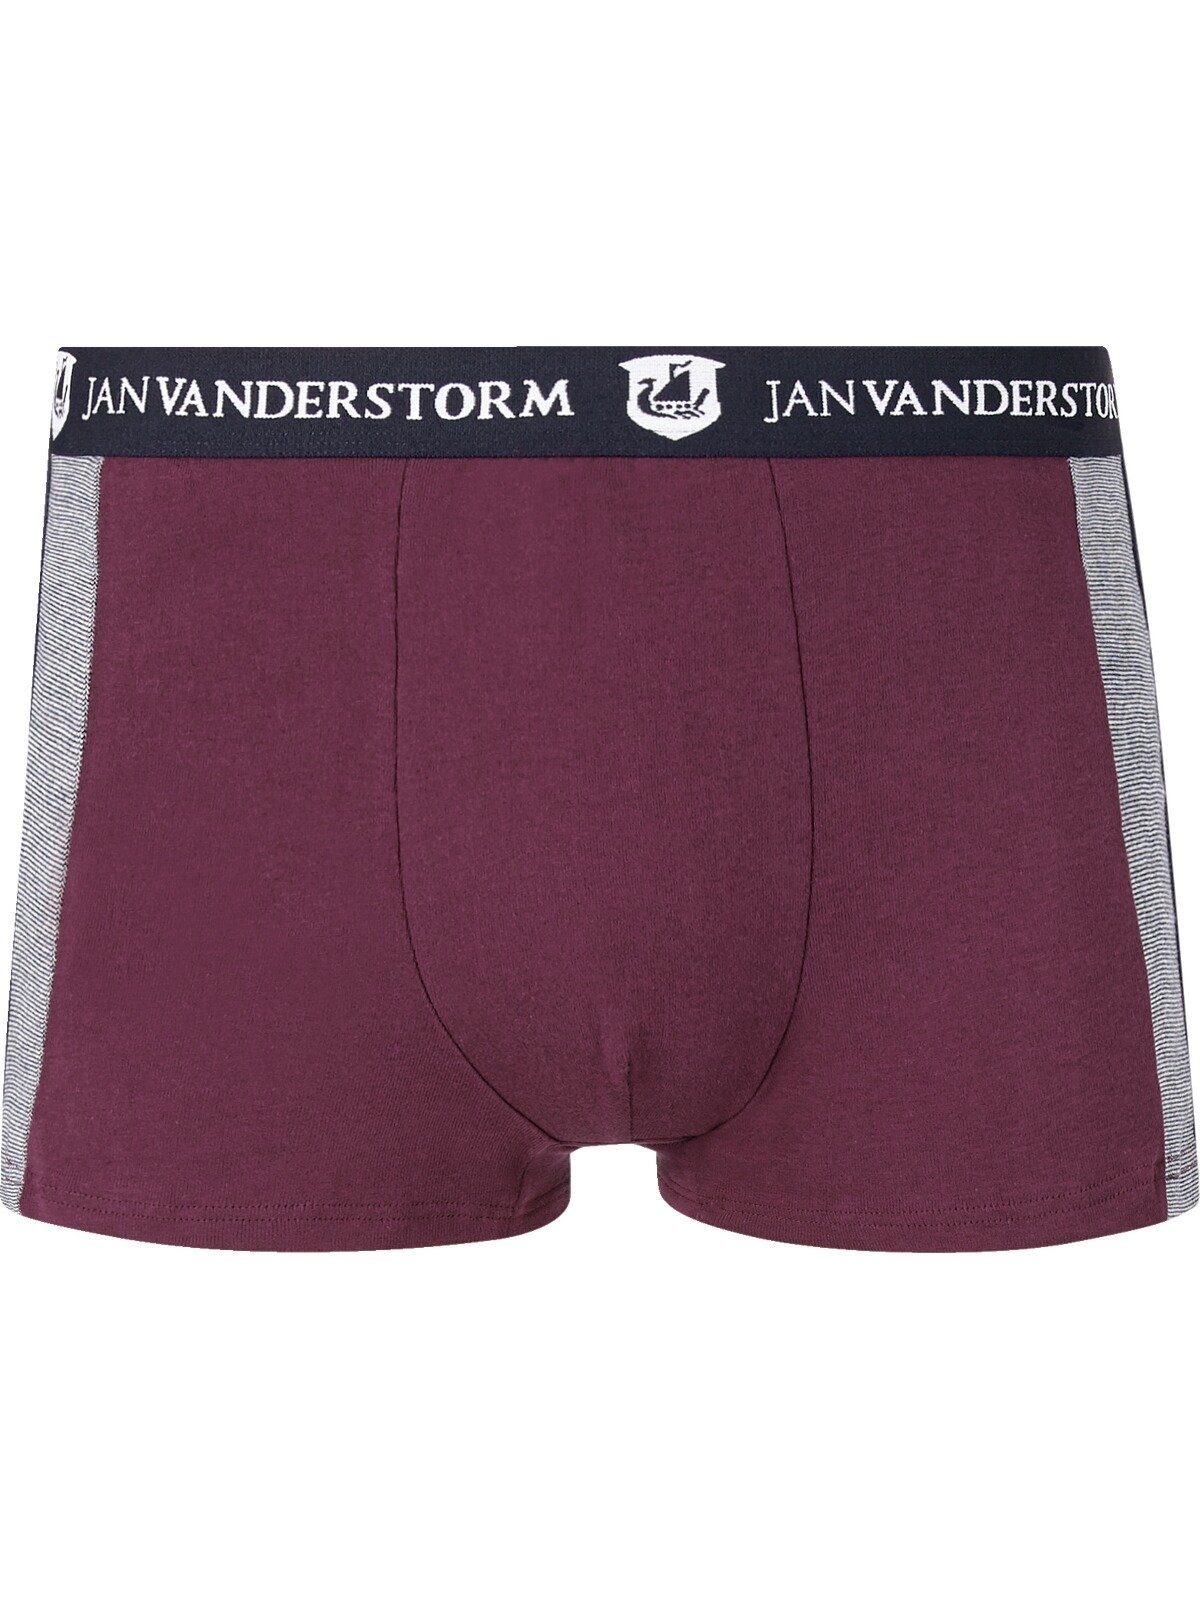 Jan Vanderstorm Retro Pants längs HARK (2, verlaufende Kontraste 2-St)